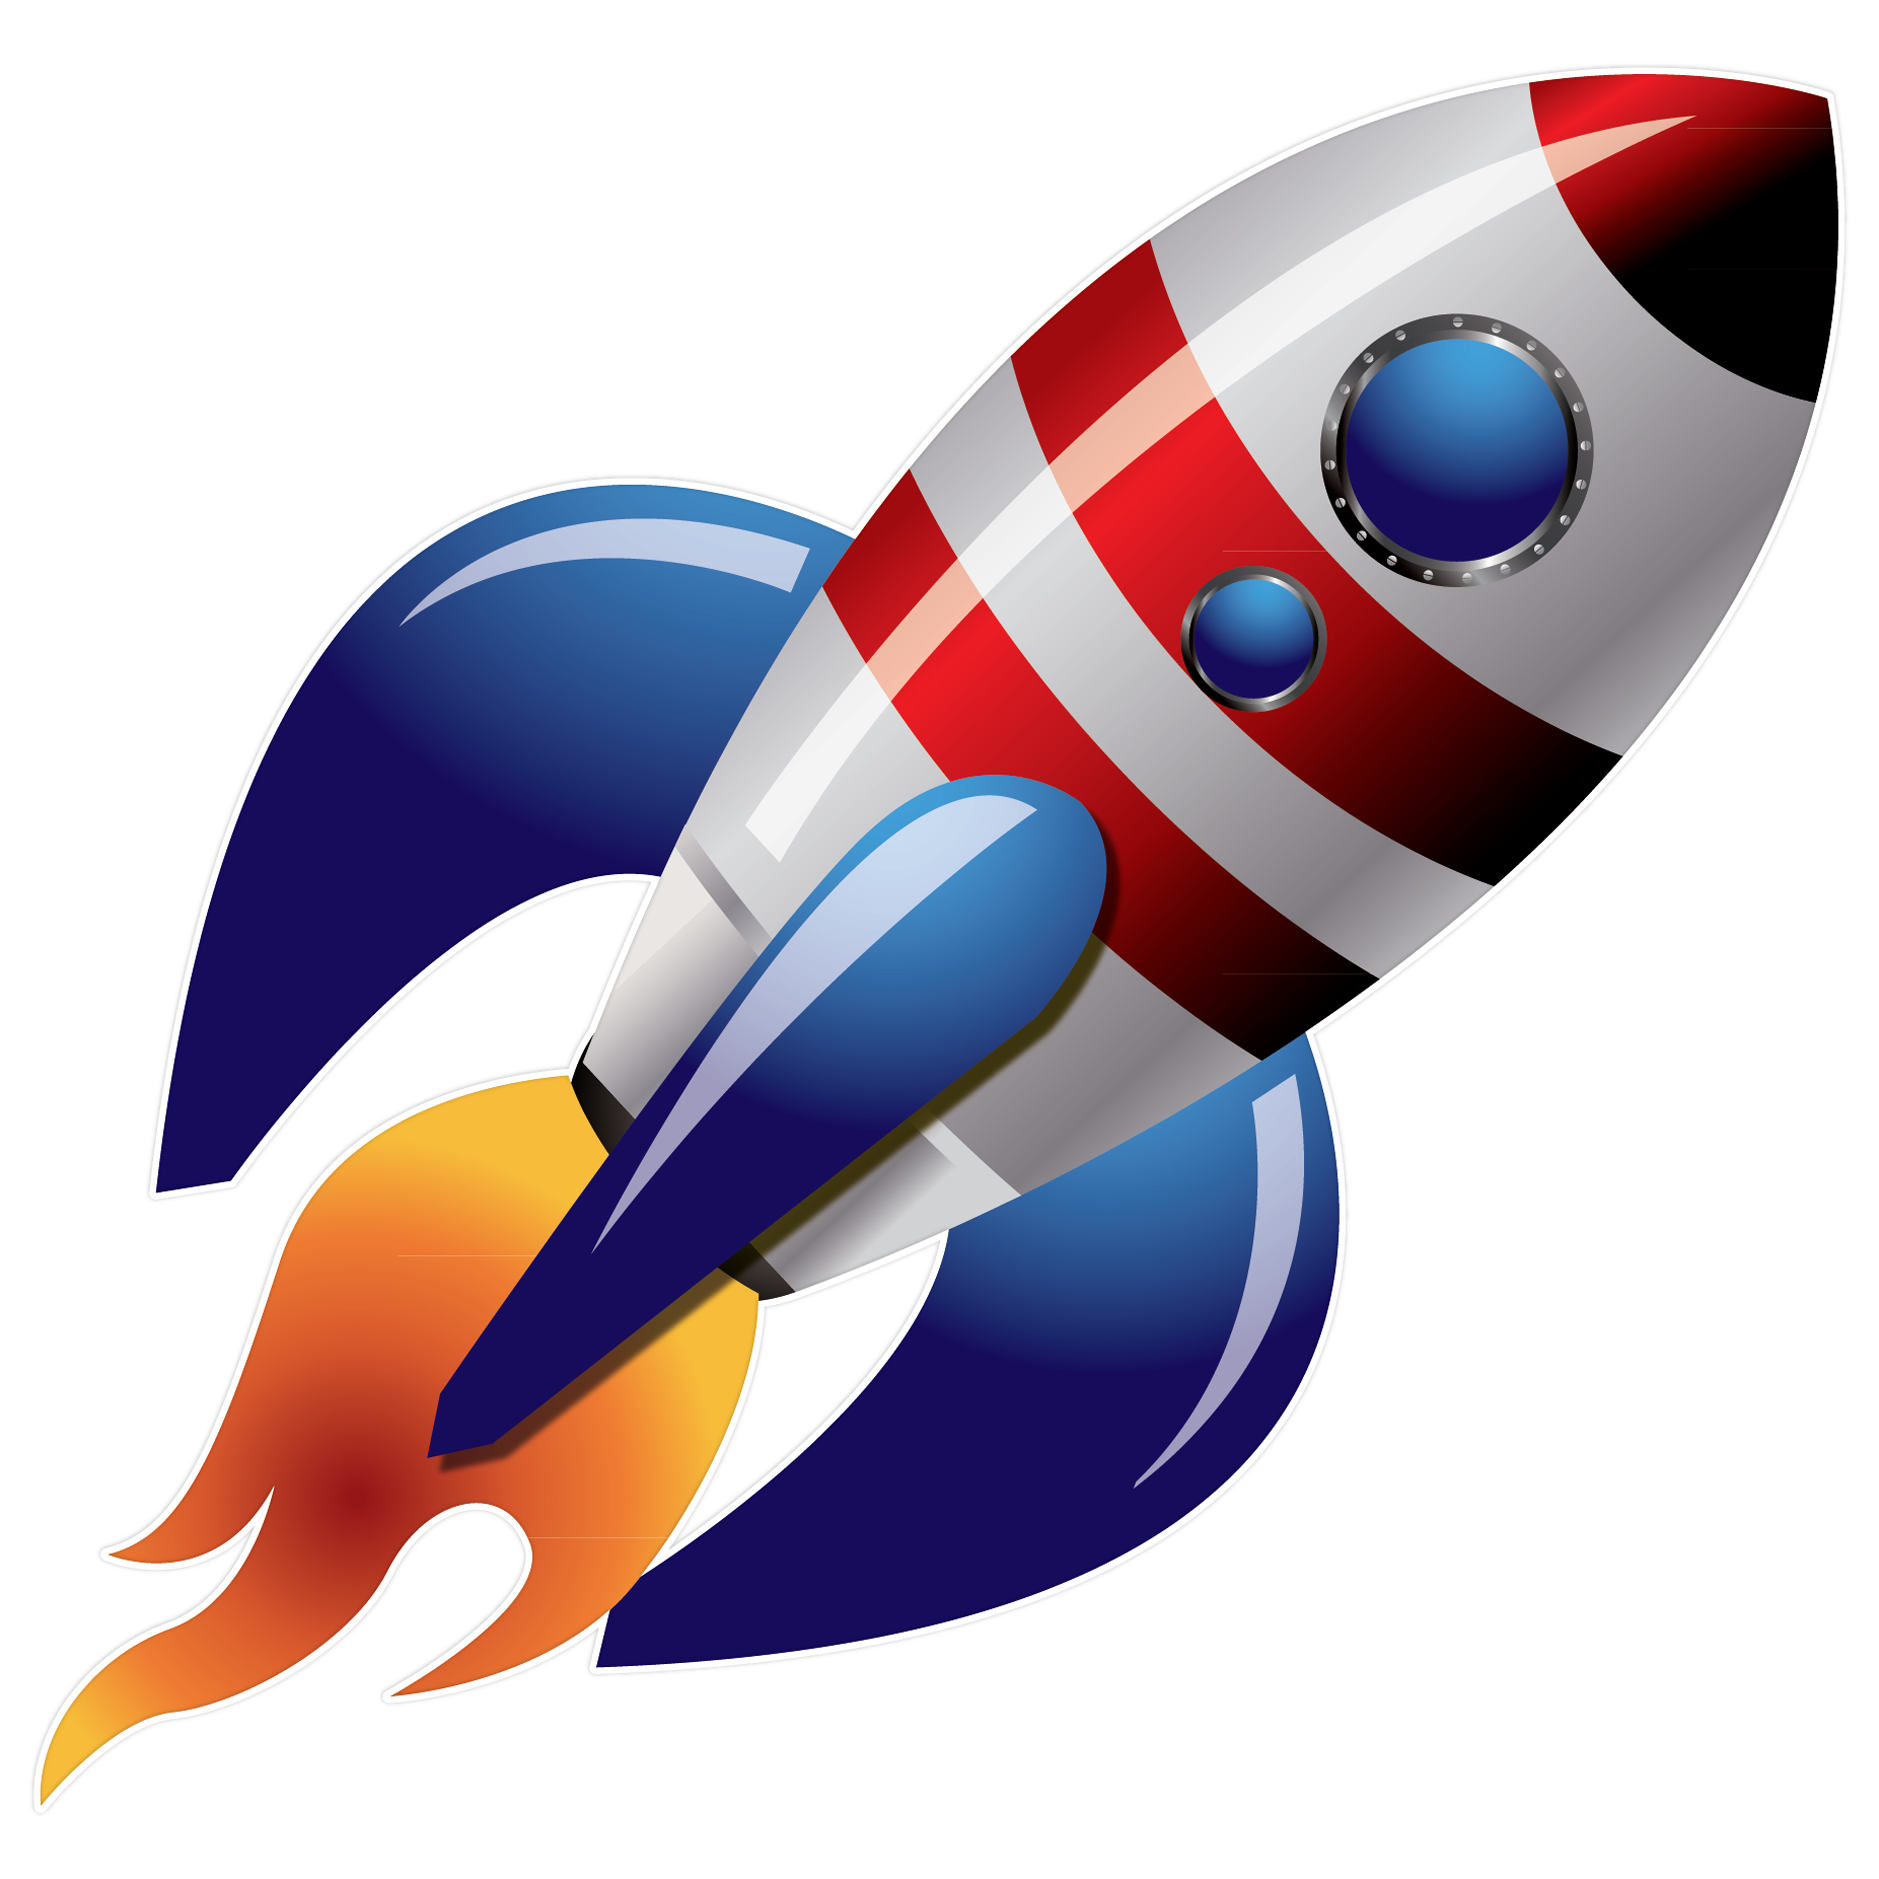 Free Rocket Ship Png, Download Free Rocket Ship Png png images